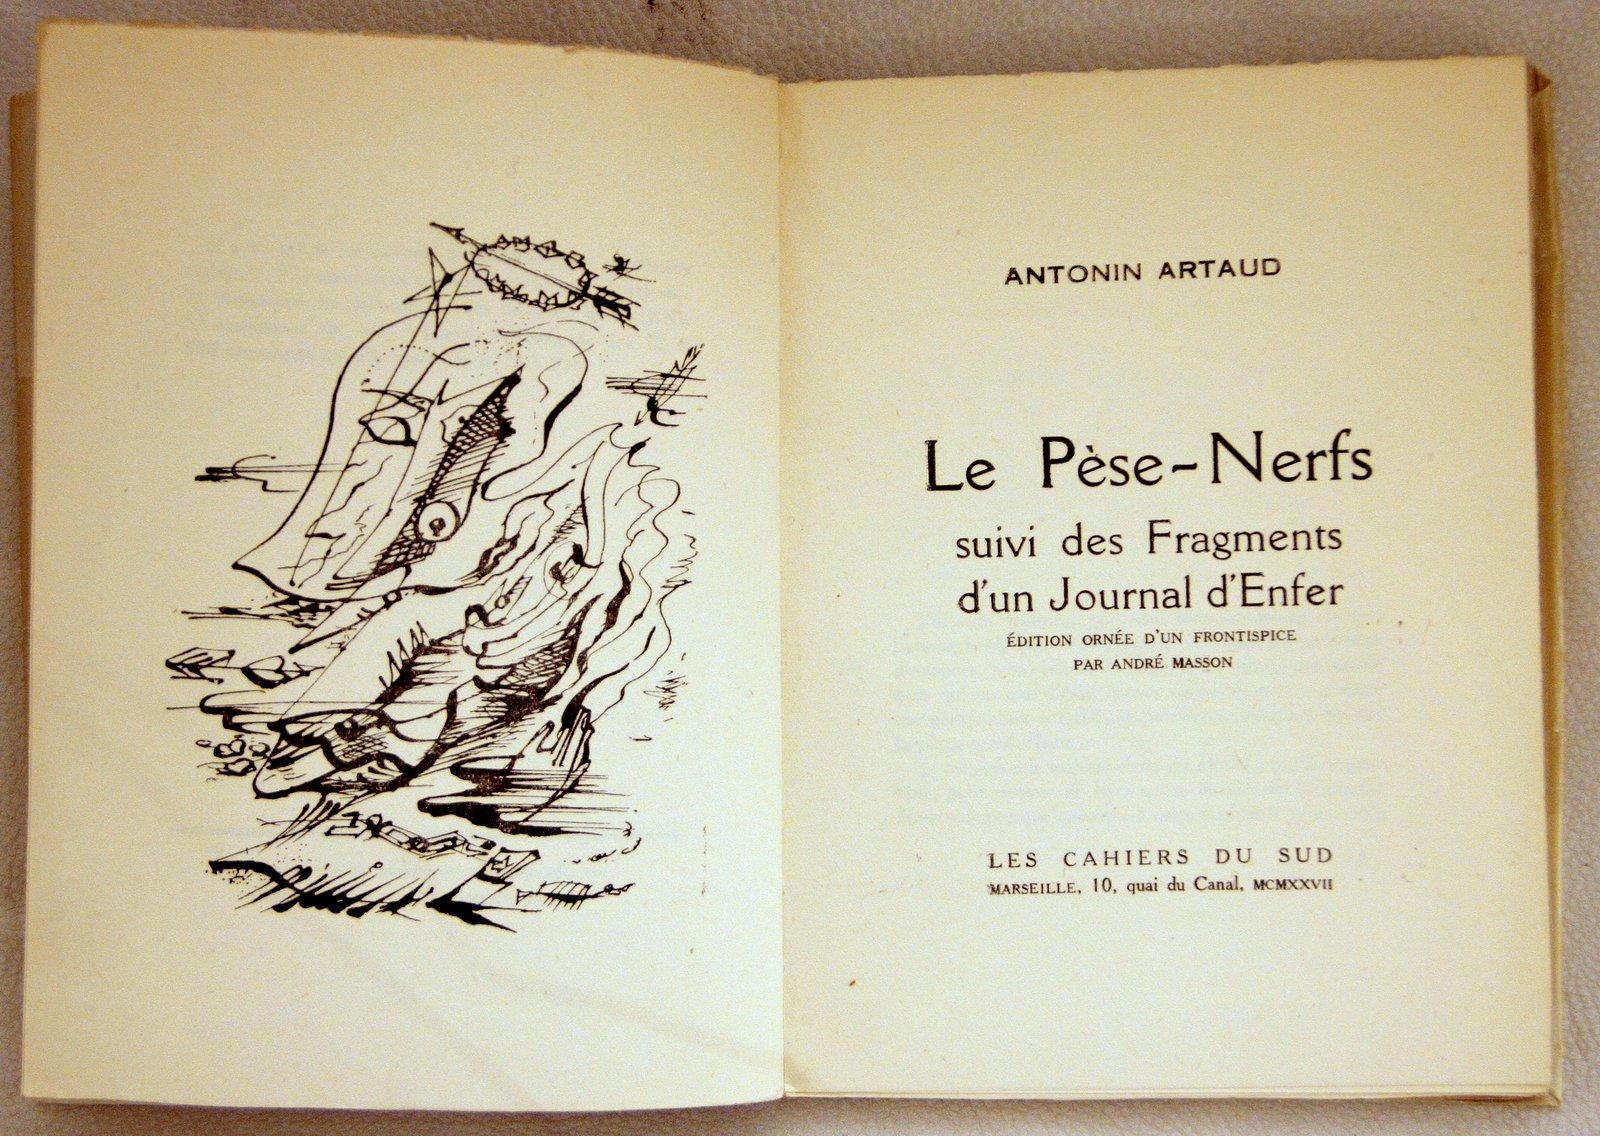 Le Pèse-Nerfs - Rare Book illustrated by Antonin Artaud - 1927 For Sale 1